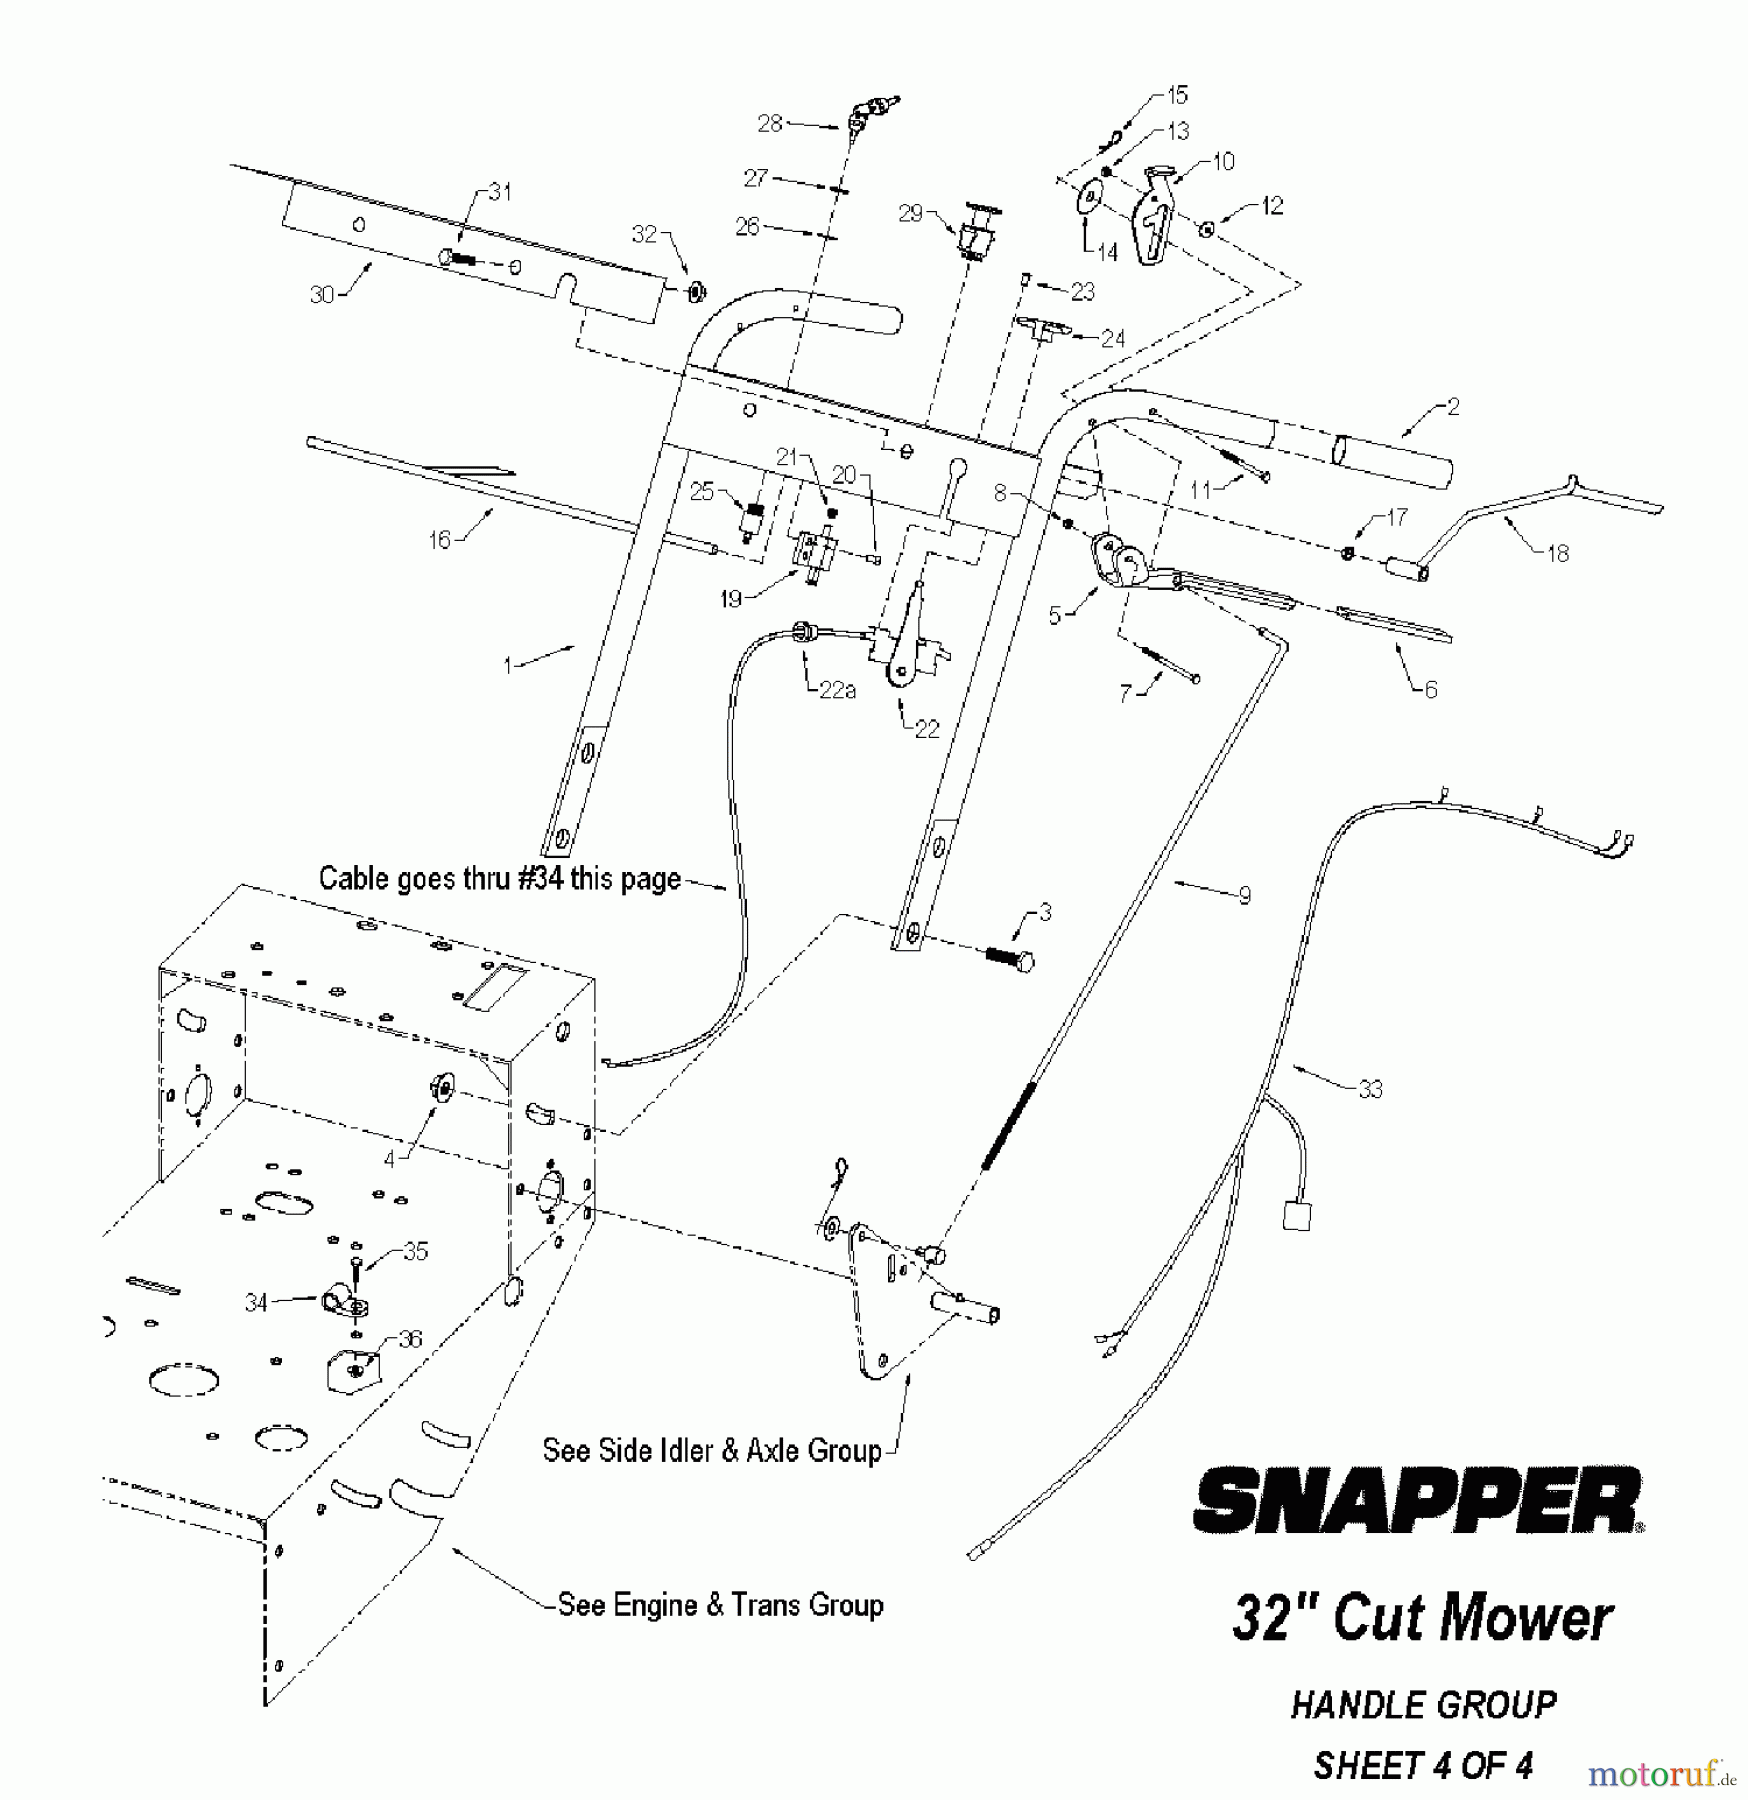  Snapper Rasenmäher für Großflächen SGV13321KW - Snapper 32